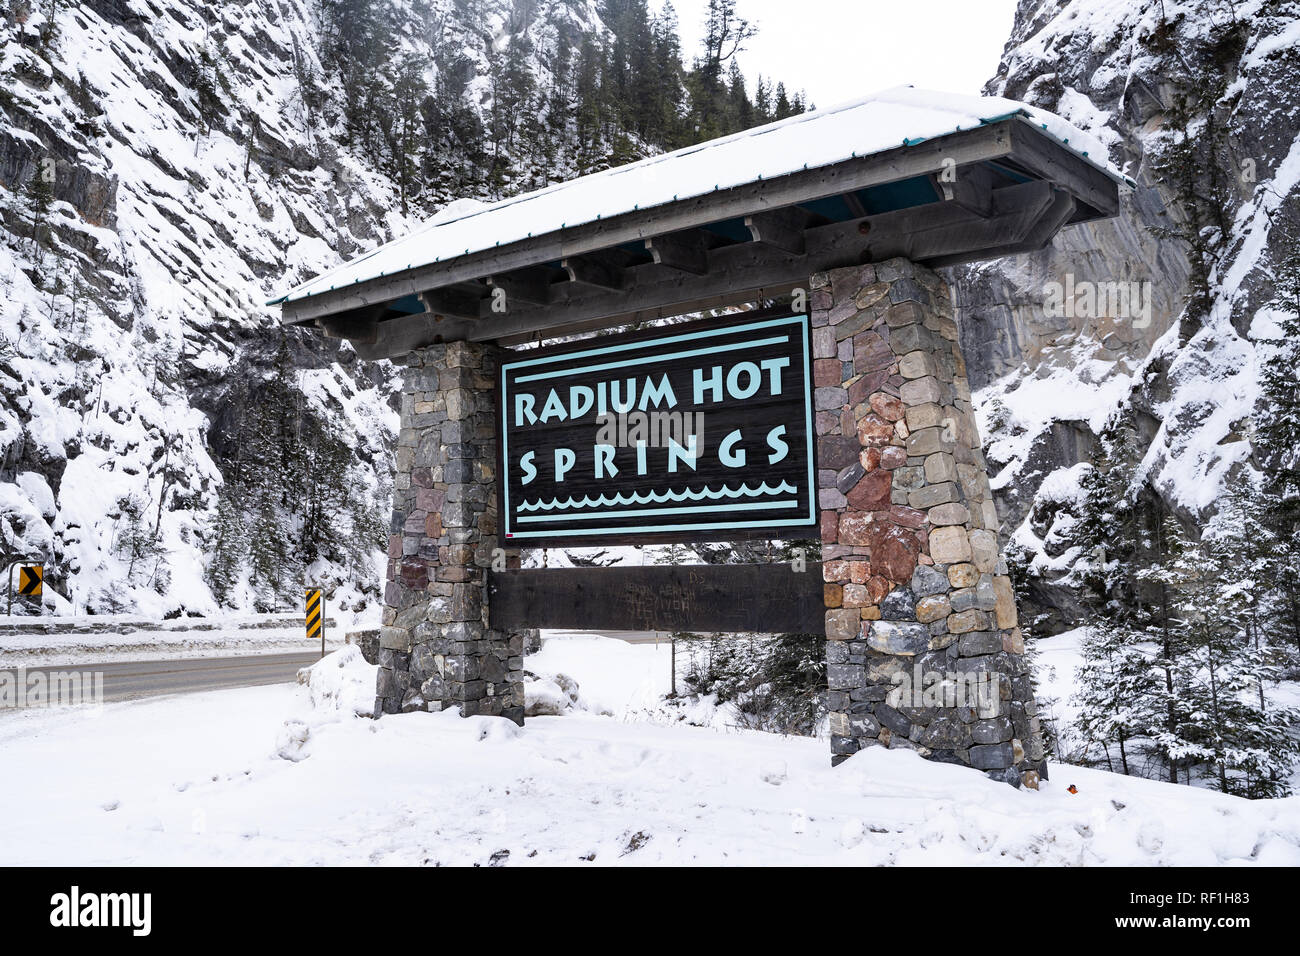 Radium Hot Springs, British Columbia, Canada - Janurary 20, 2019: Sign welcoming visitors to Radium Hot Springs in the winter Stock Photo